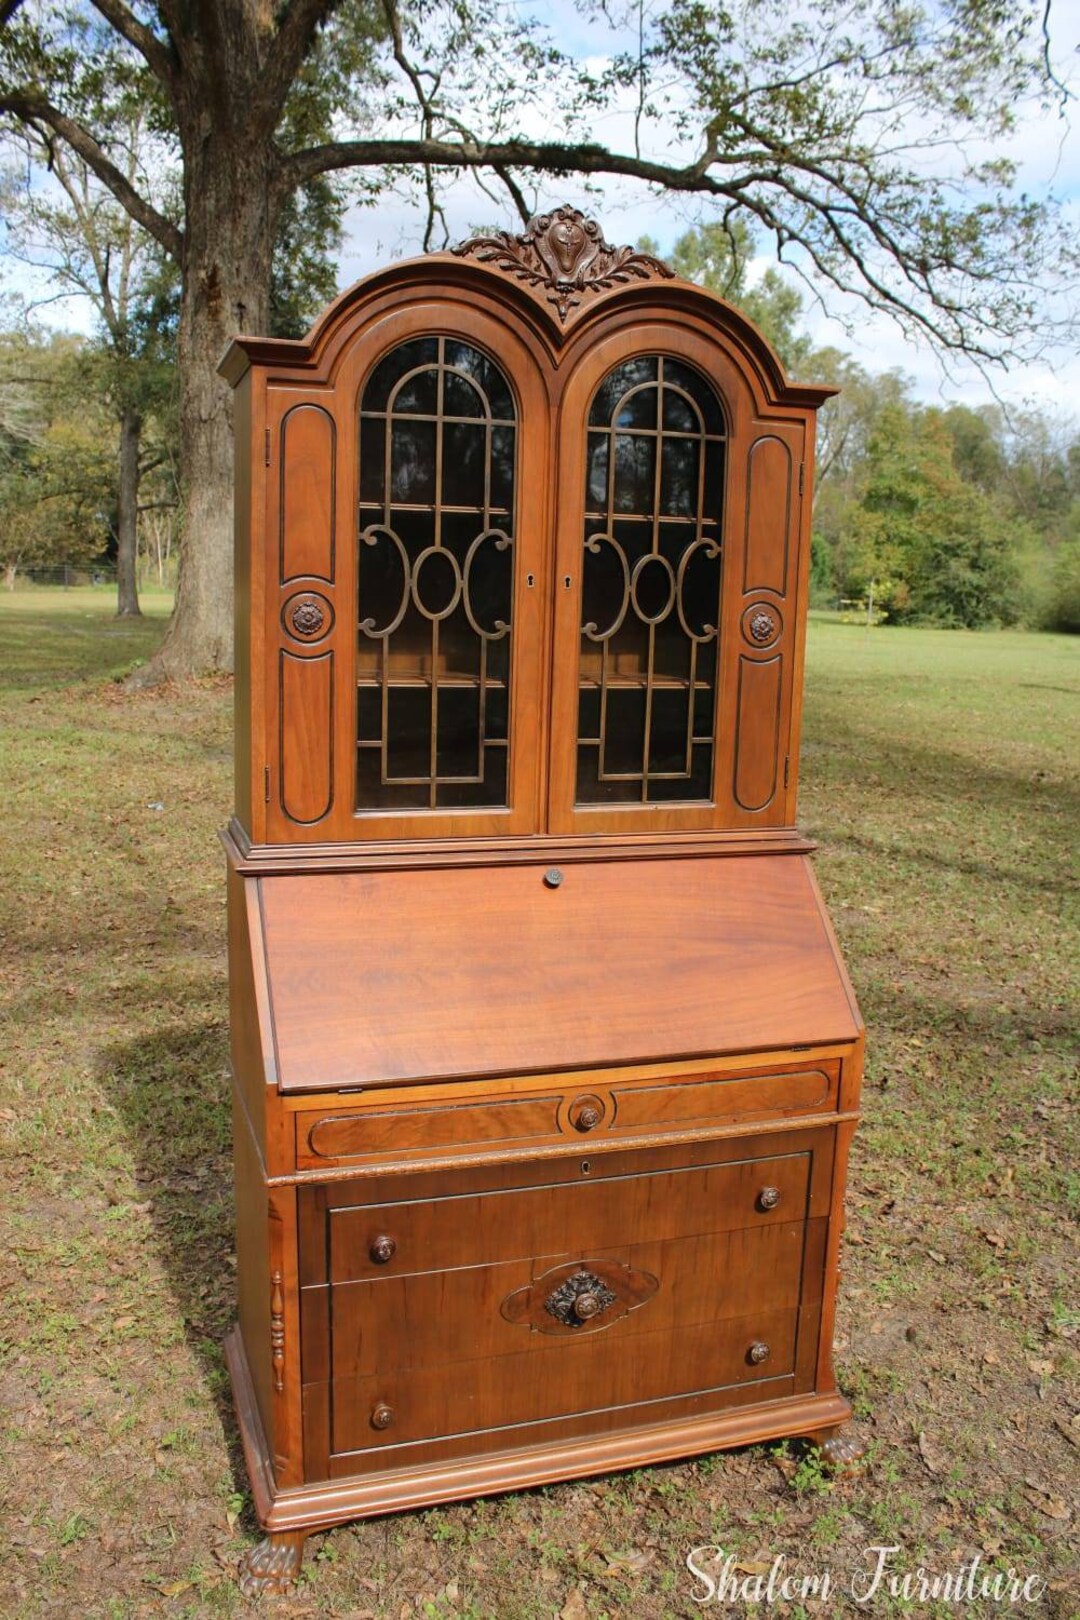 Exquisite Antique Desks for Sale